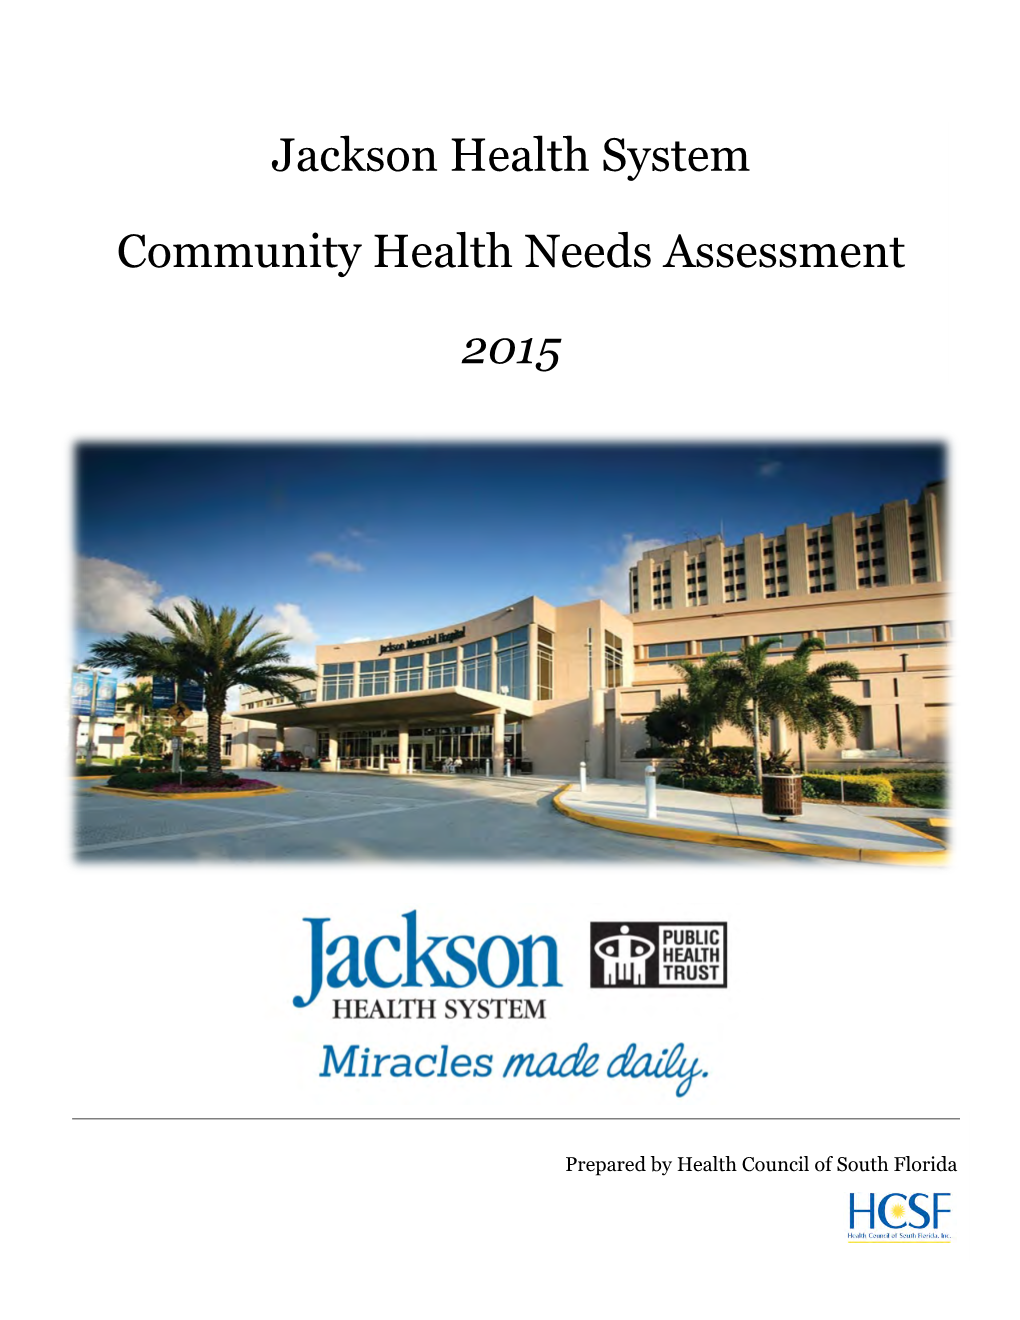 Jackson Health System Community Health Needs Assessment 2015